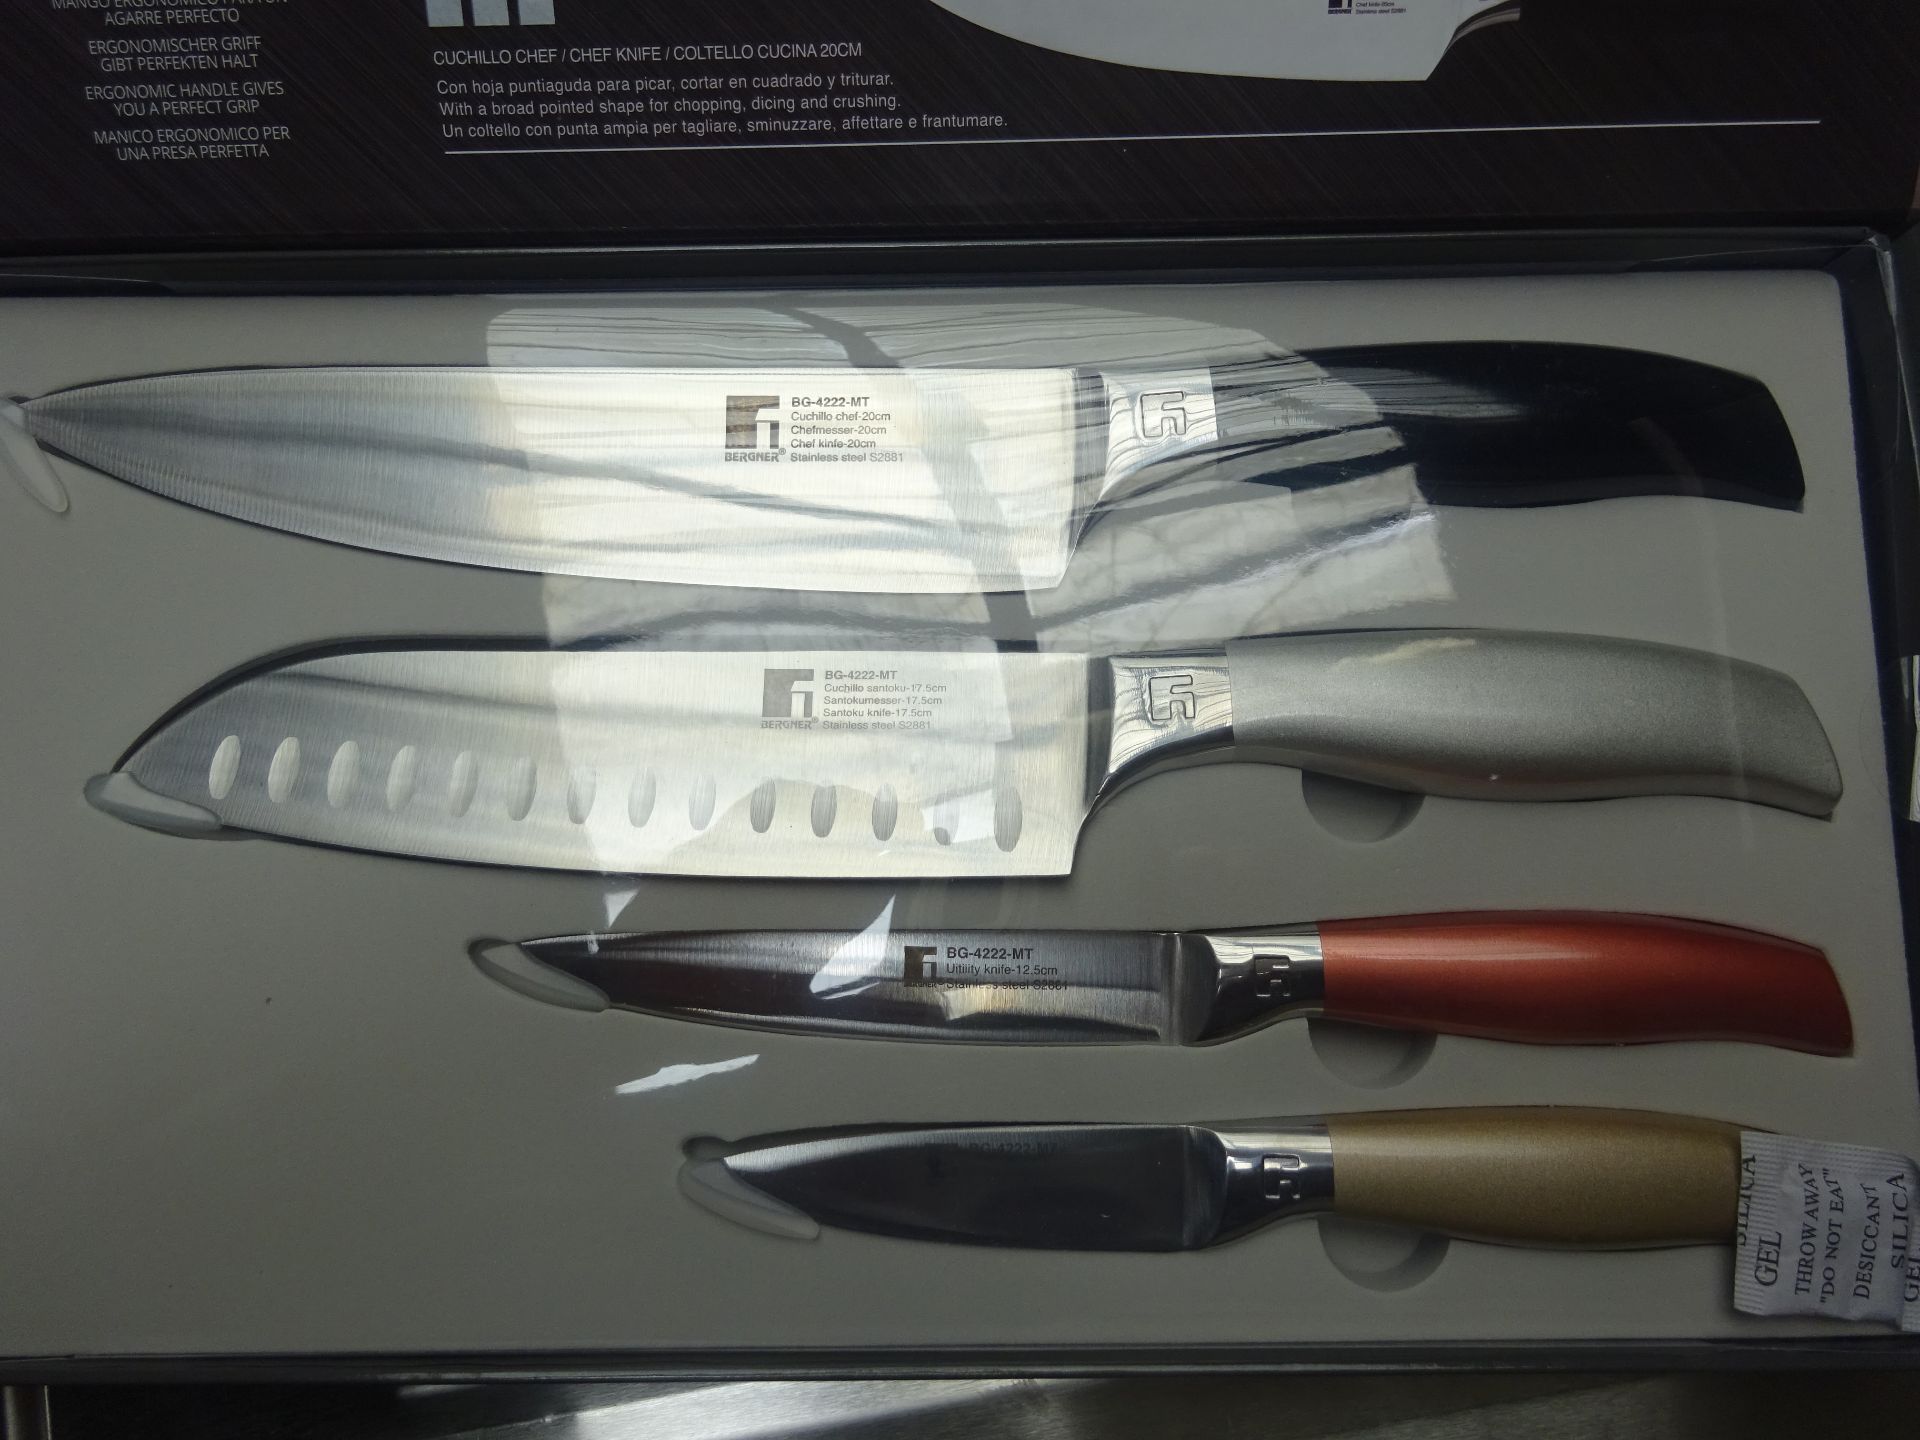 Bergner Neon 4pc knife set